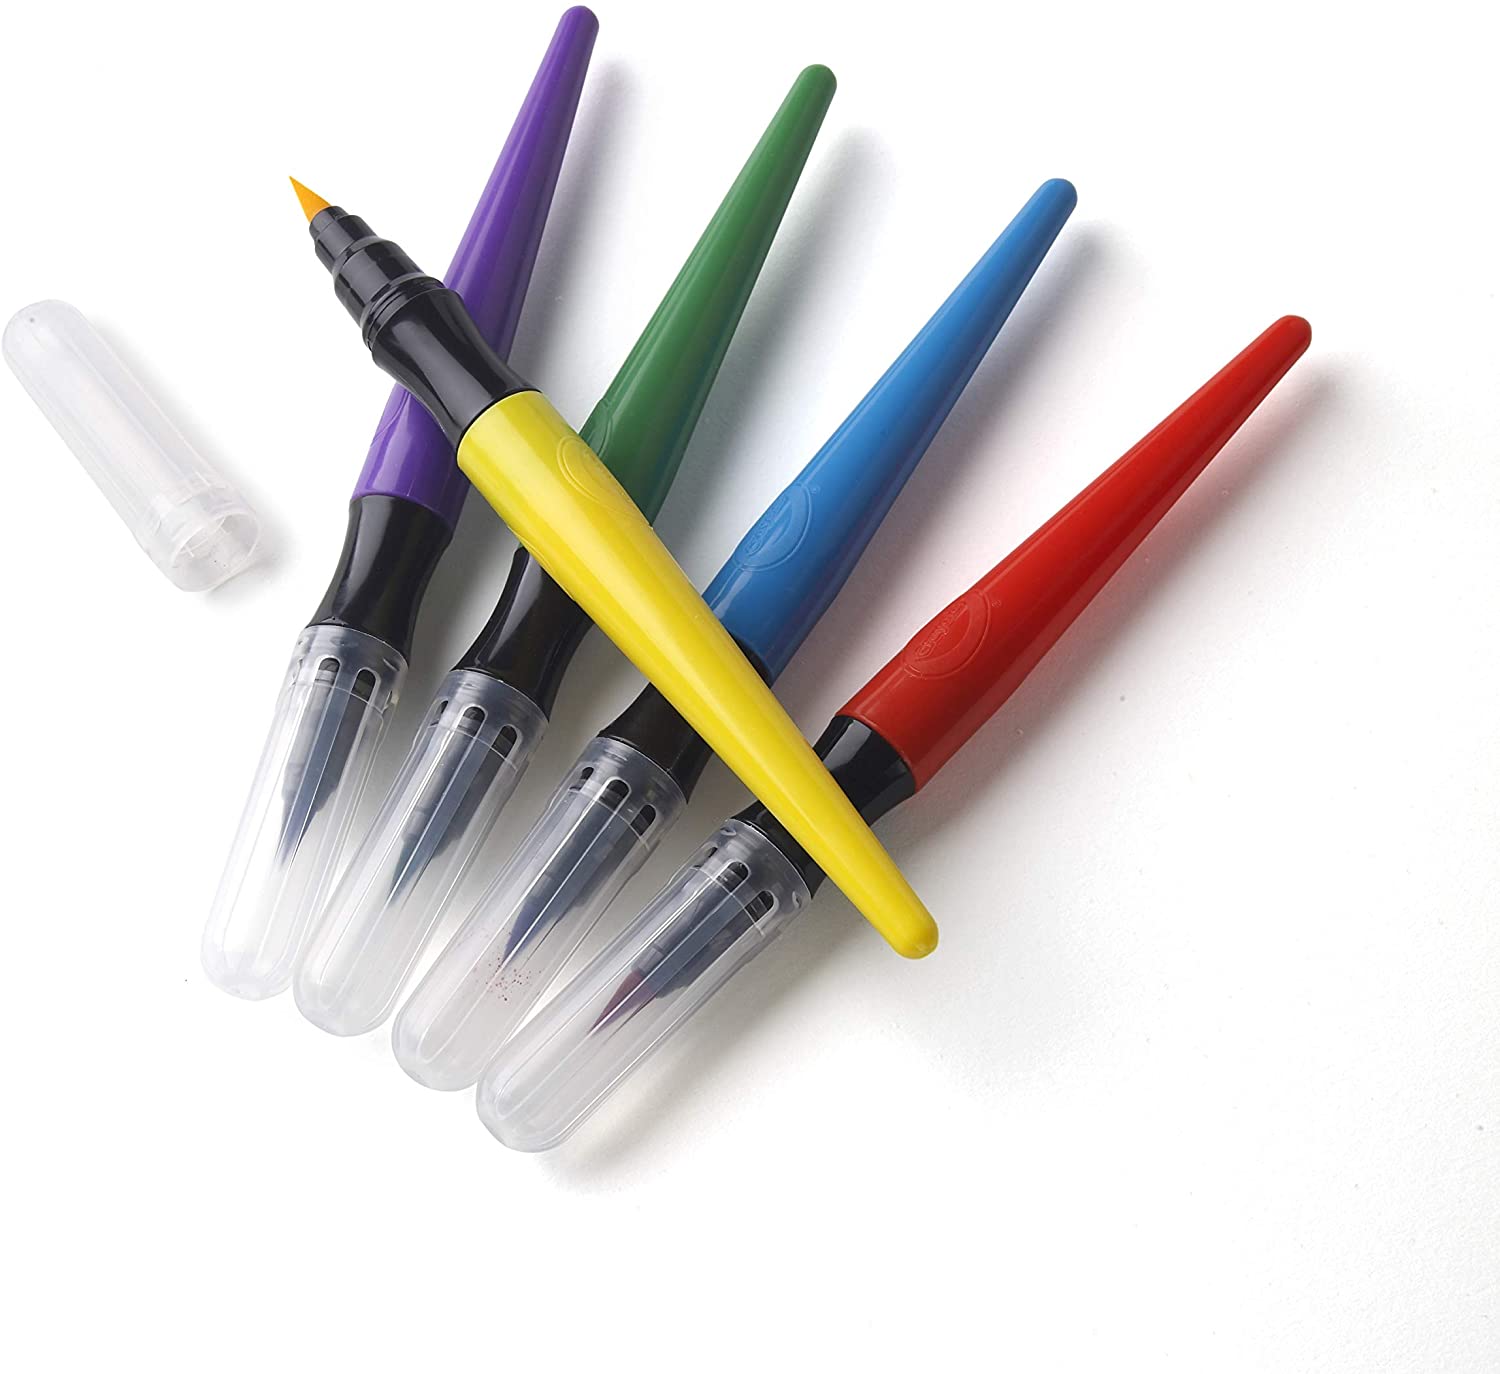 Crayola Washable Kids Paint Set & Paintbrush, 18 Count, Painting Supplies